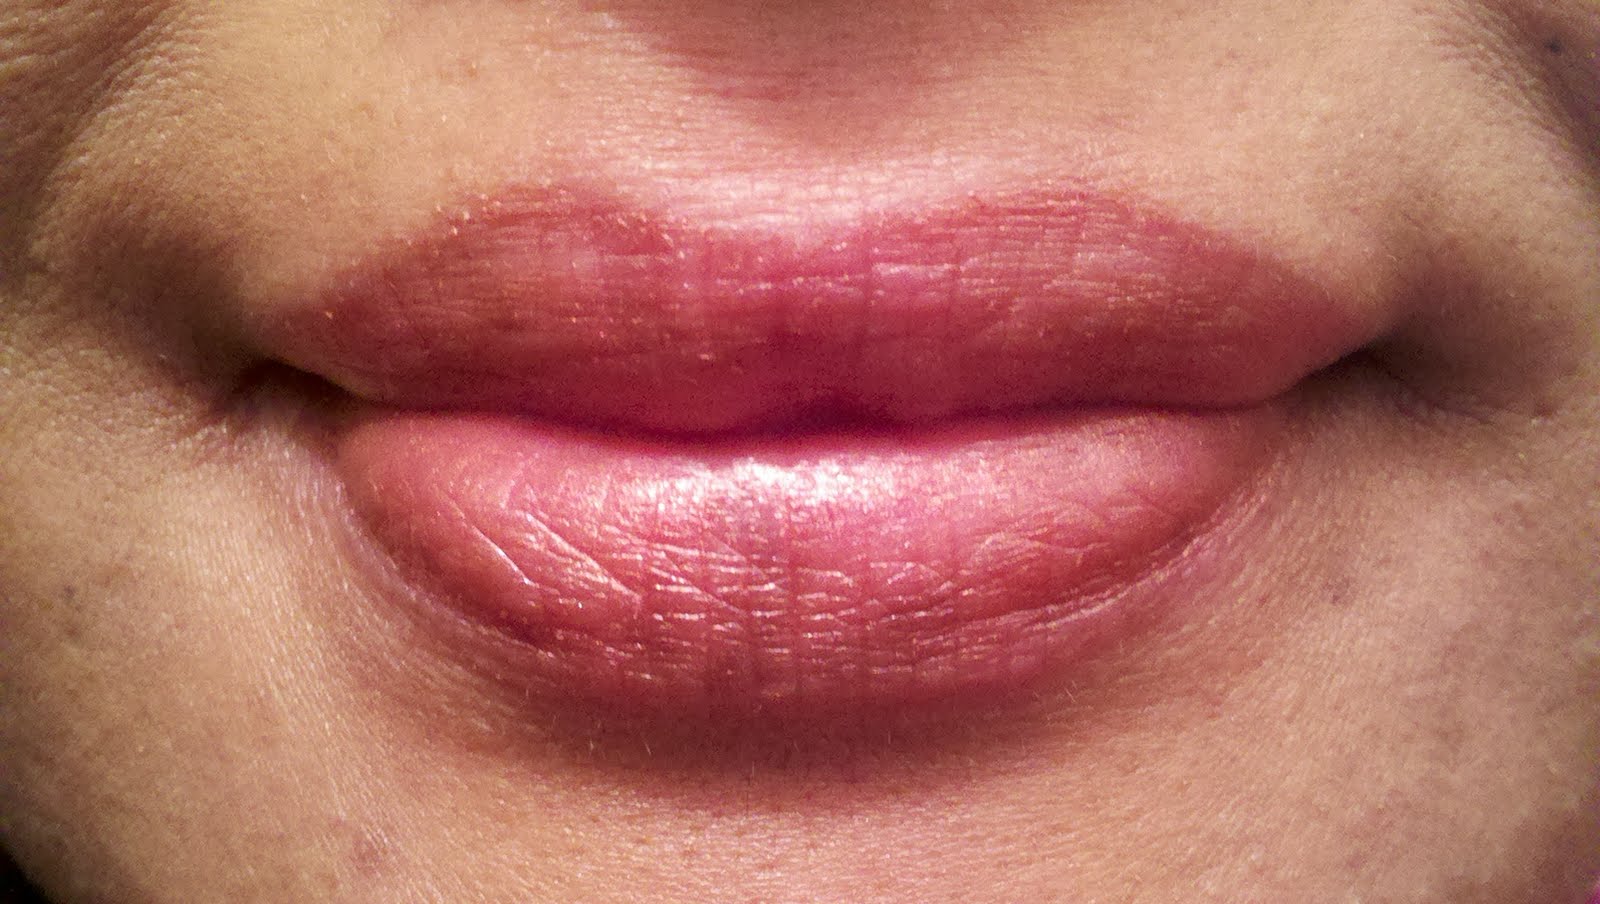 Lip Eczema/Dermatitis - Need help badly! at Peeling Lips ...